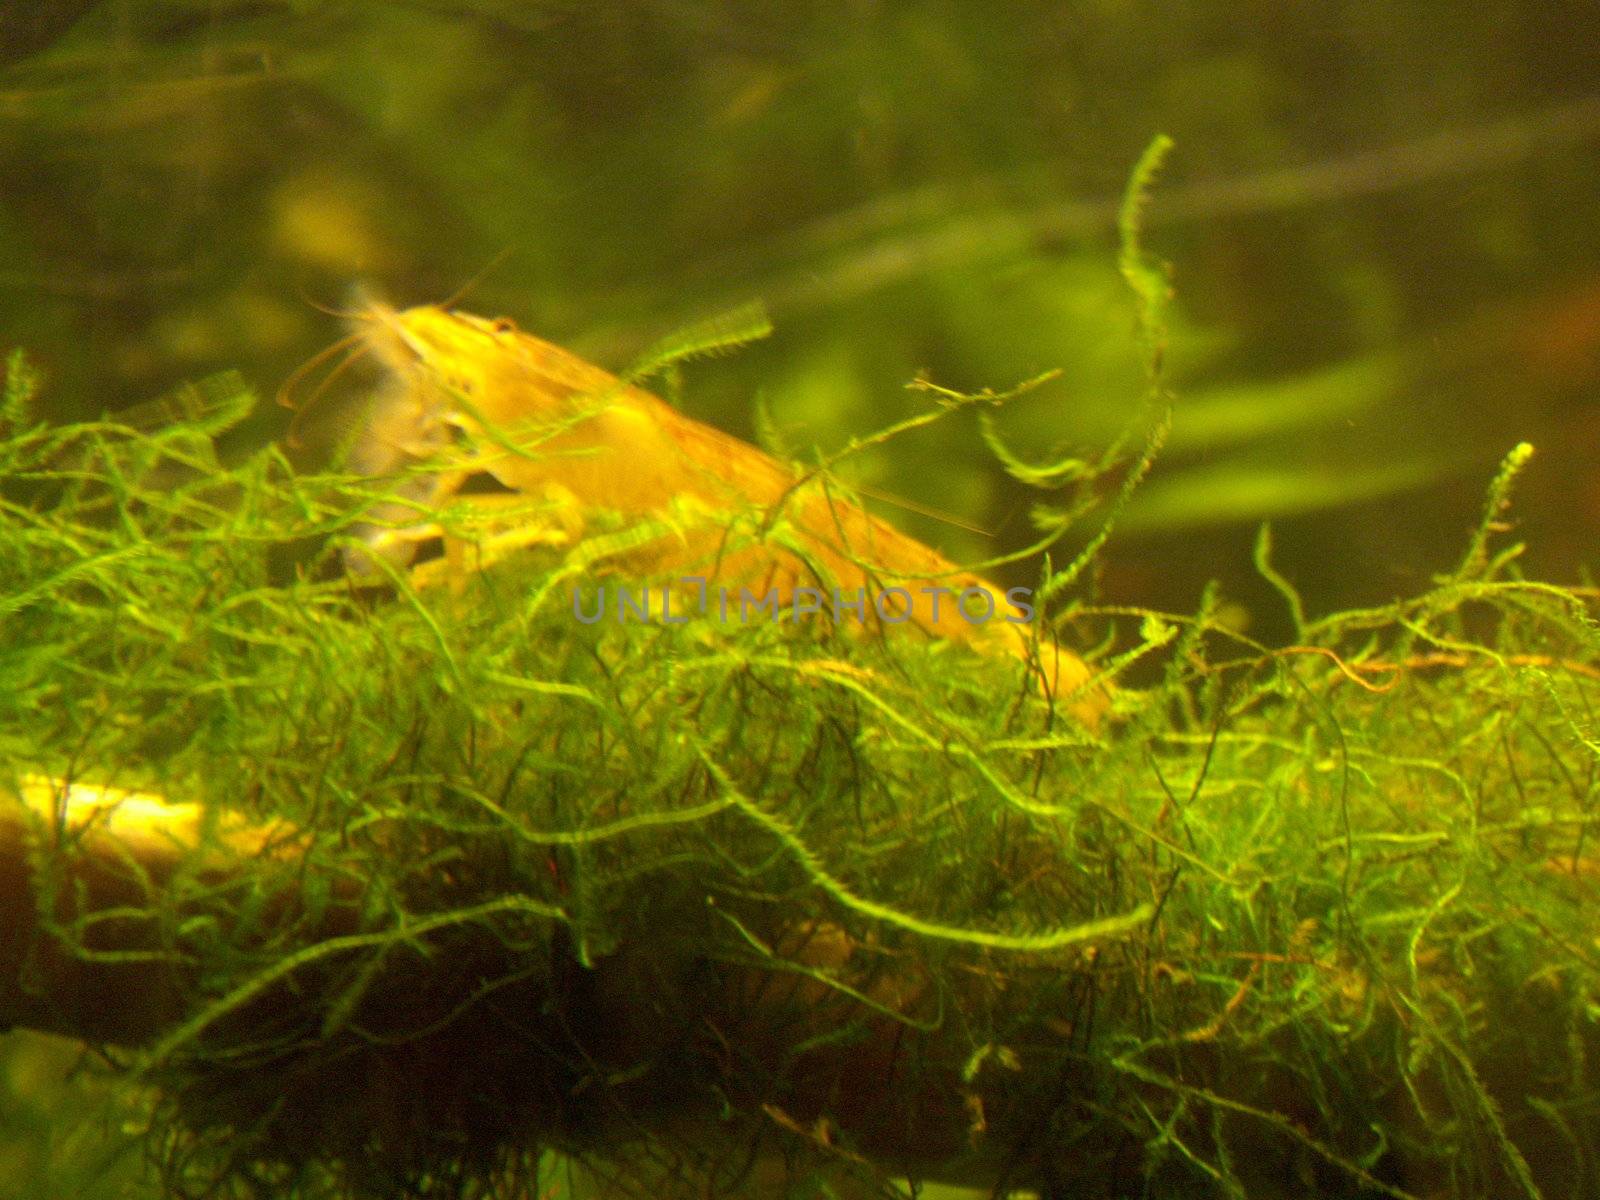 Shrimp sitting on a java moss eating.